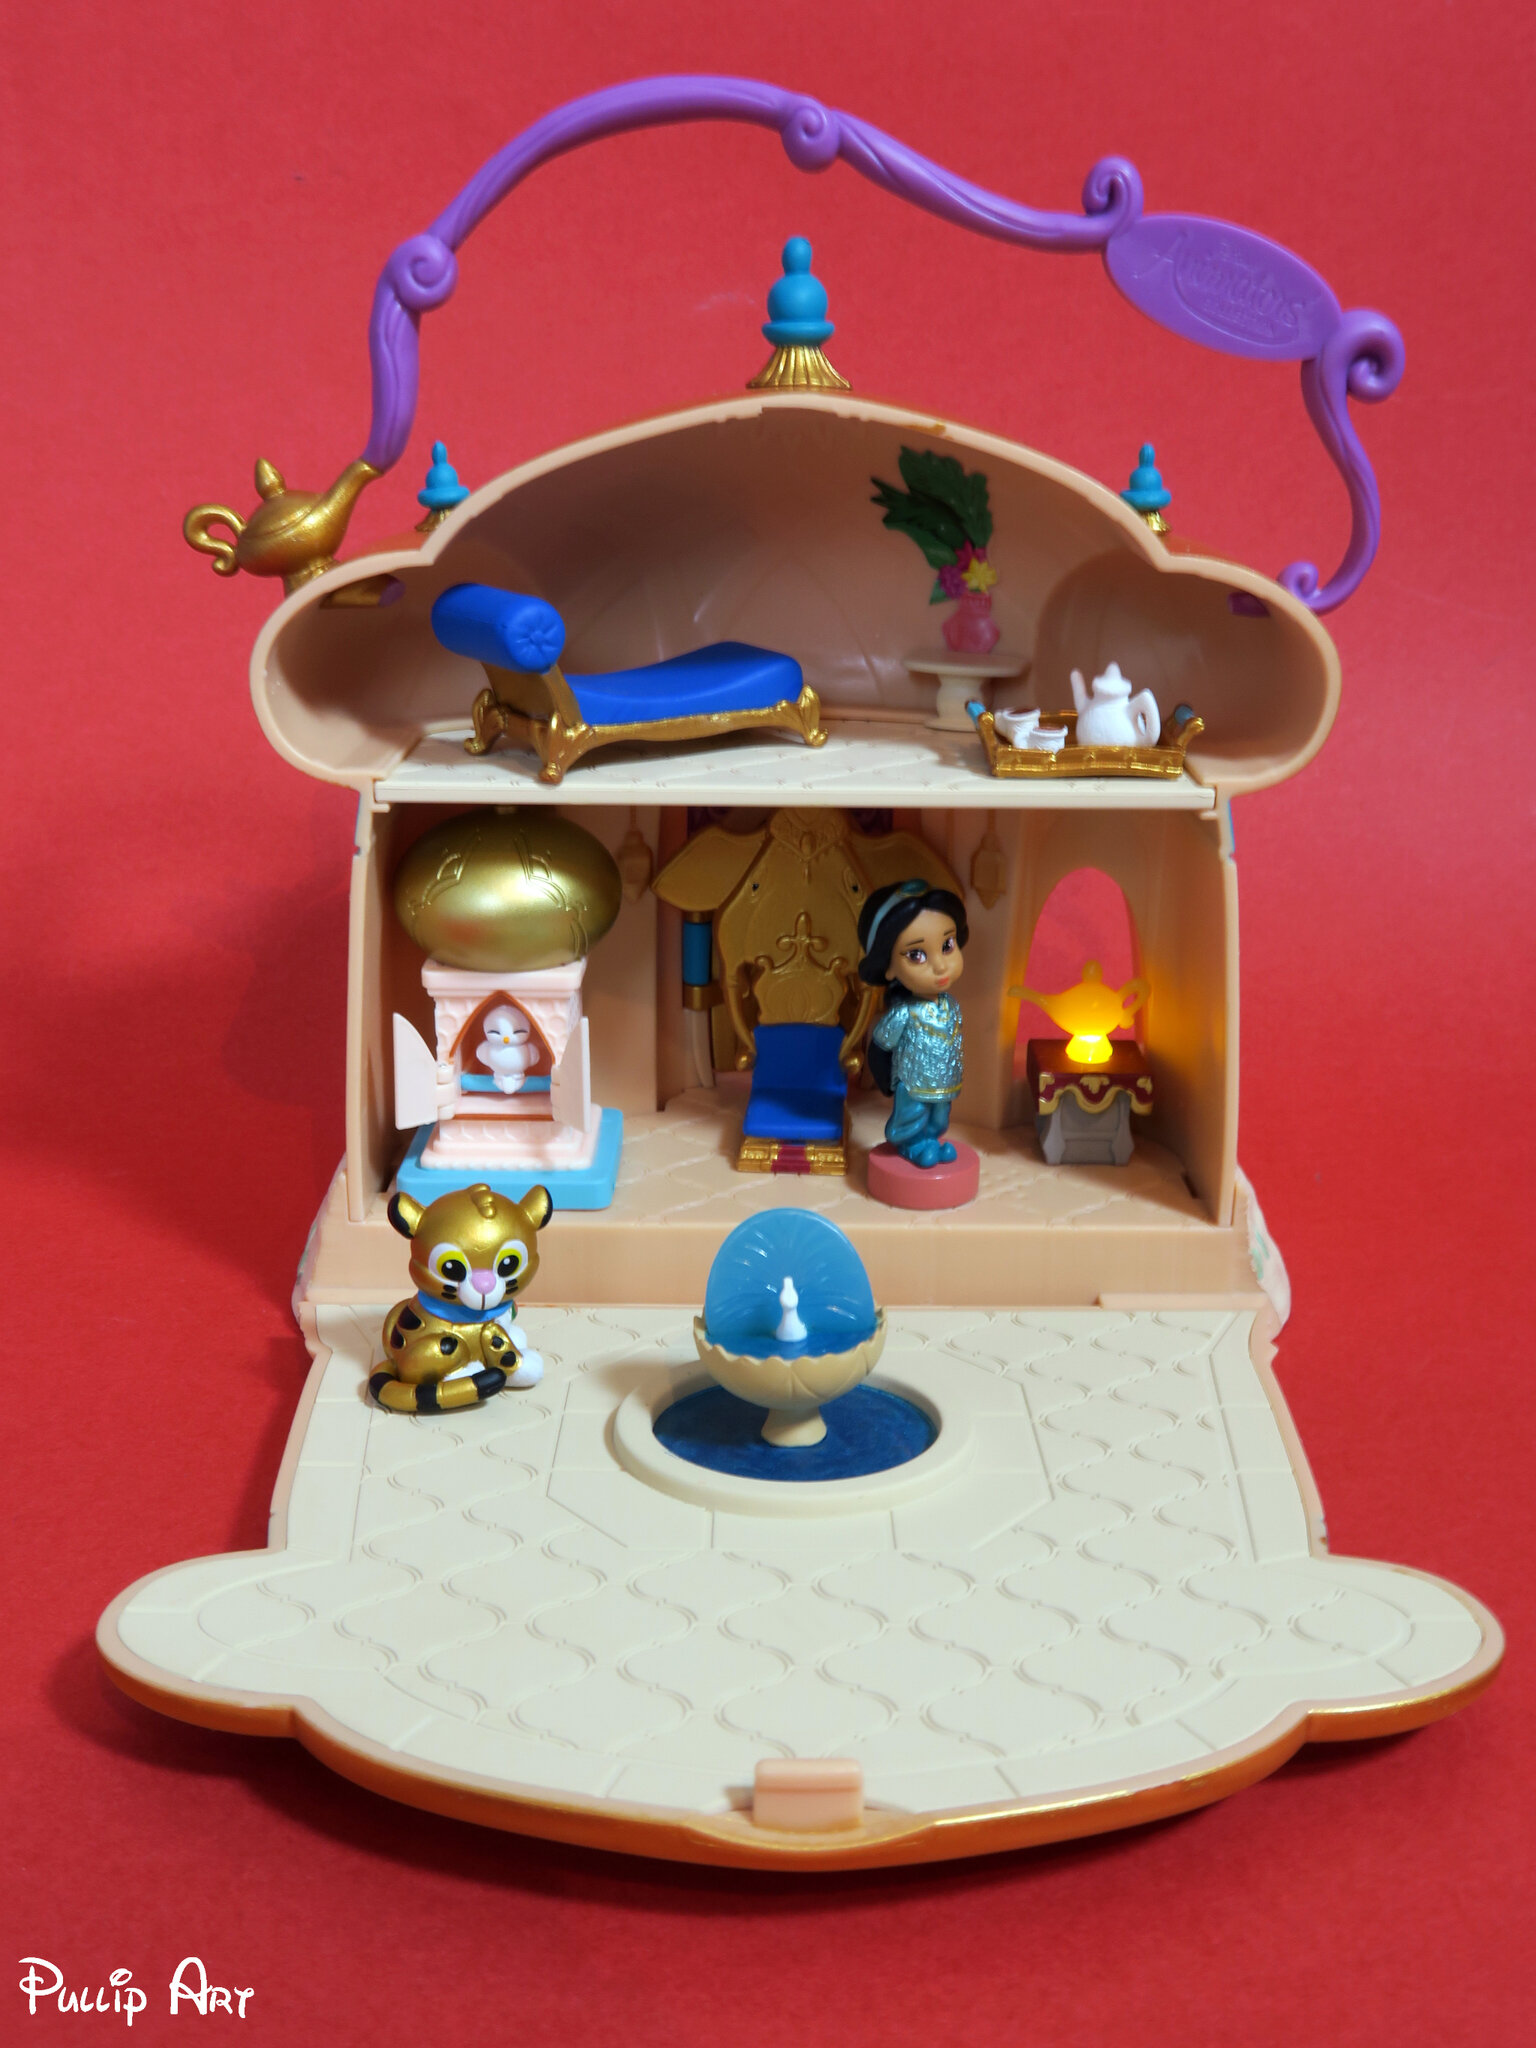 Disney Animators' Collection Littles : Jasmine Micro Playset